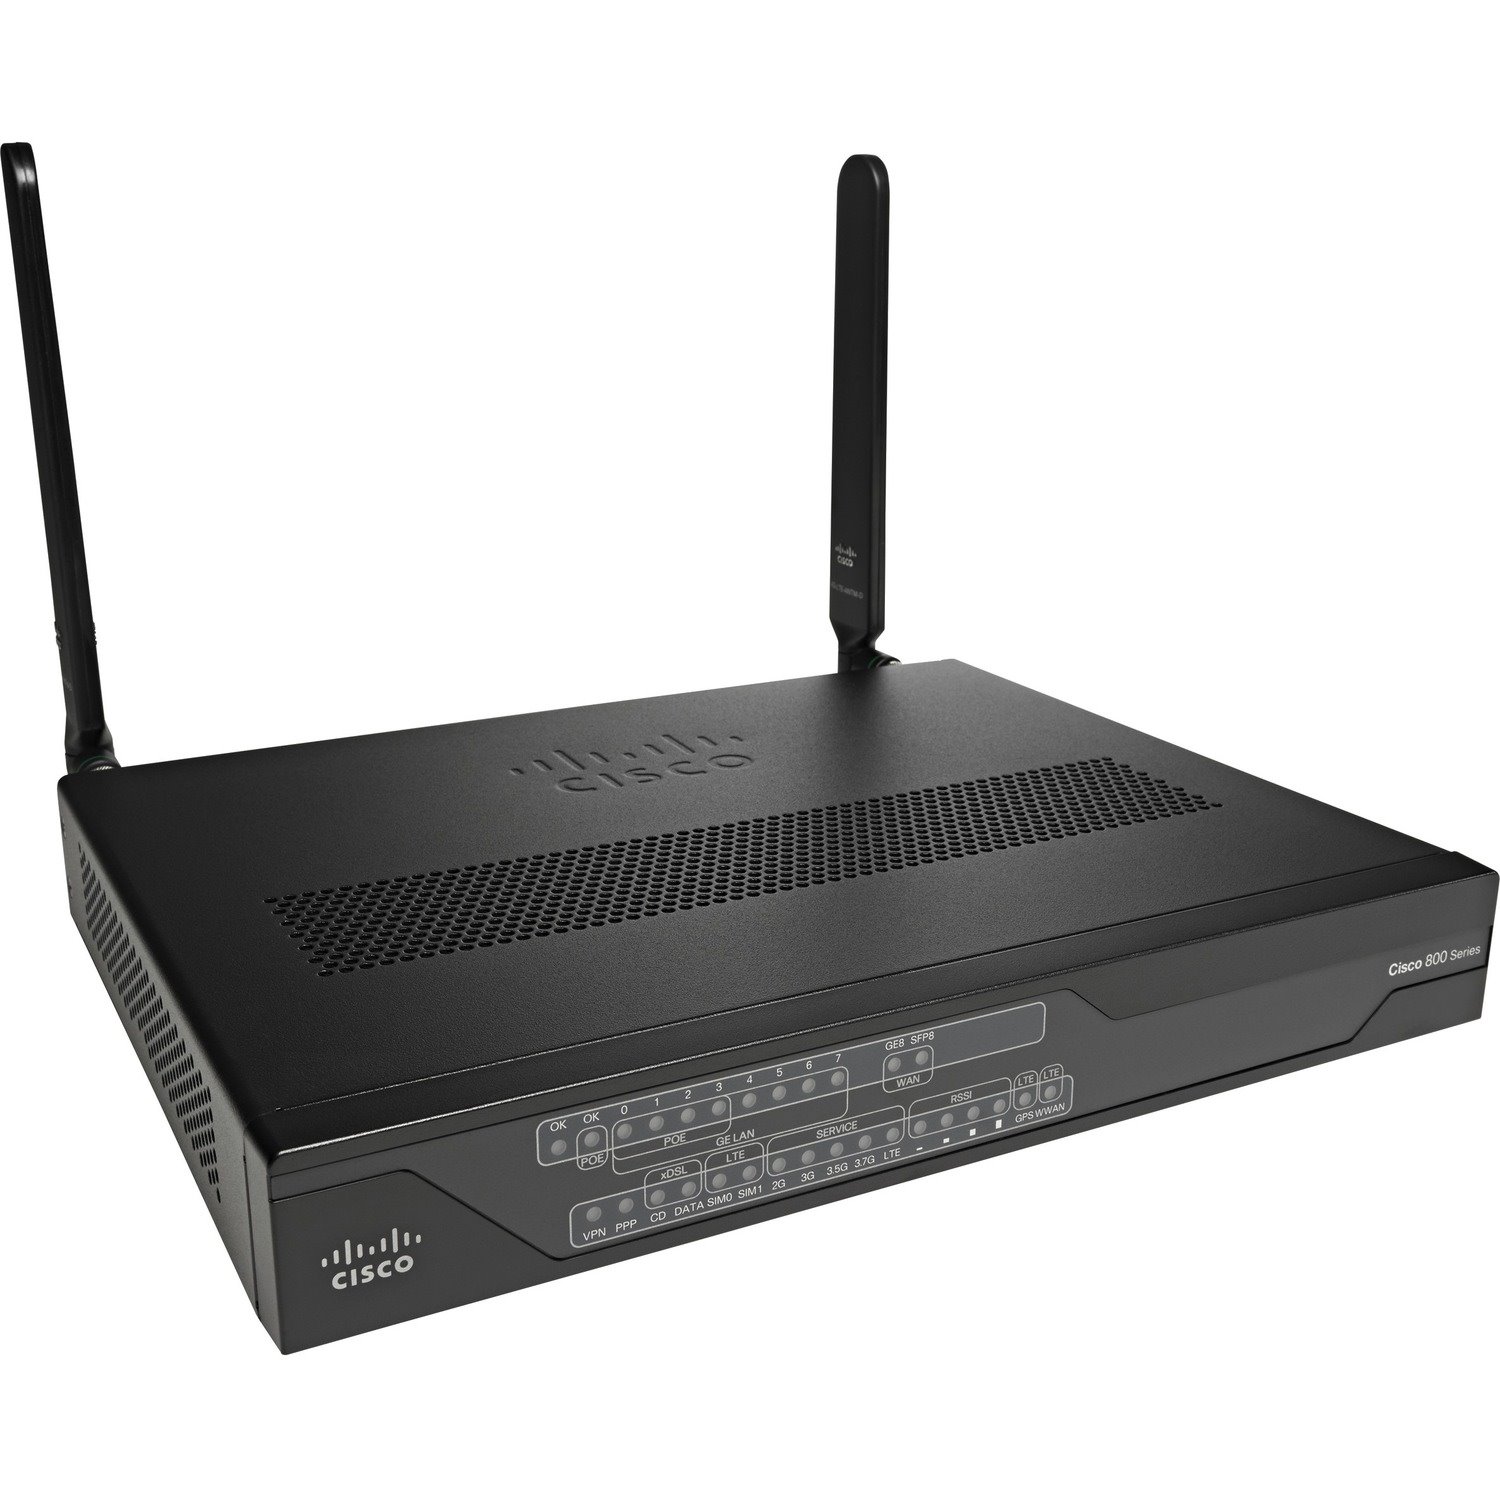 Cisco C897VAMG-LTE ADSL2+, VDSL, Cellular Modem/Wireless Router